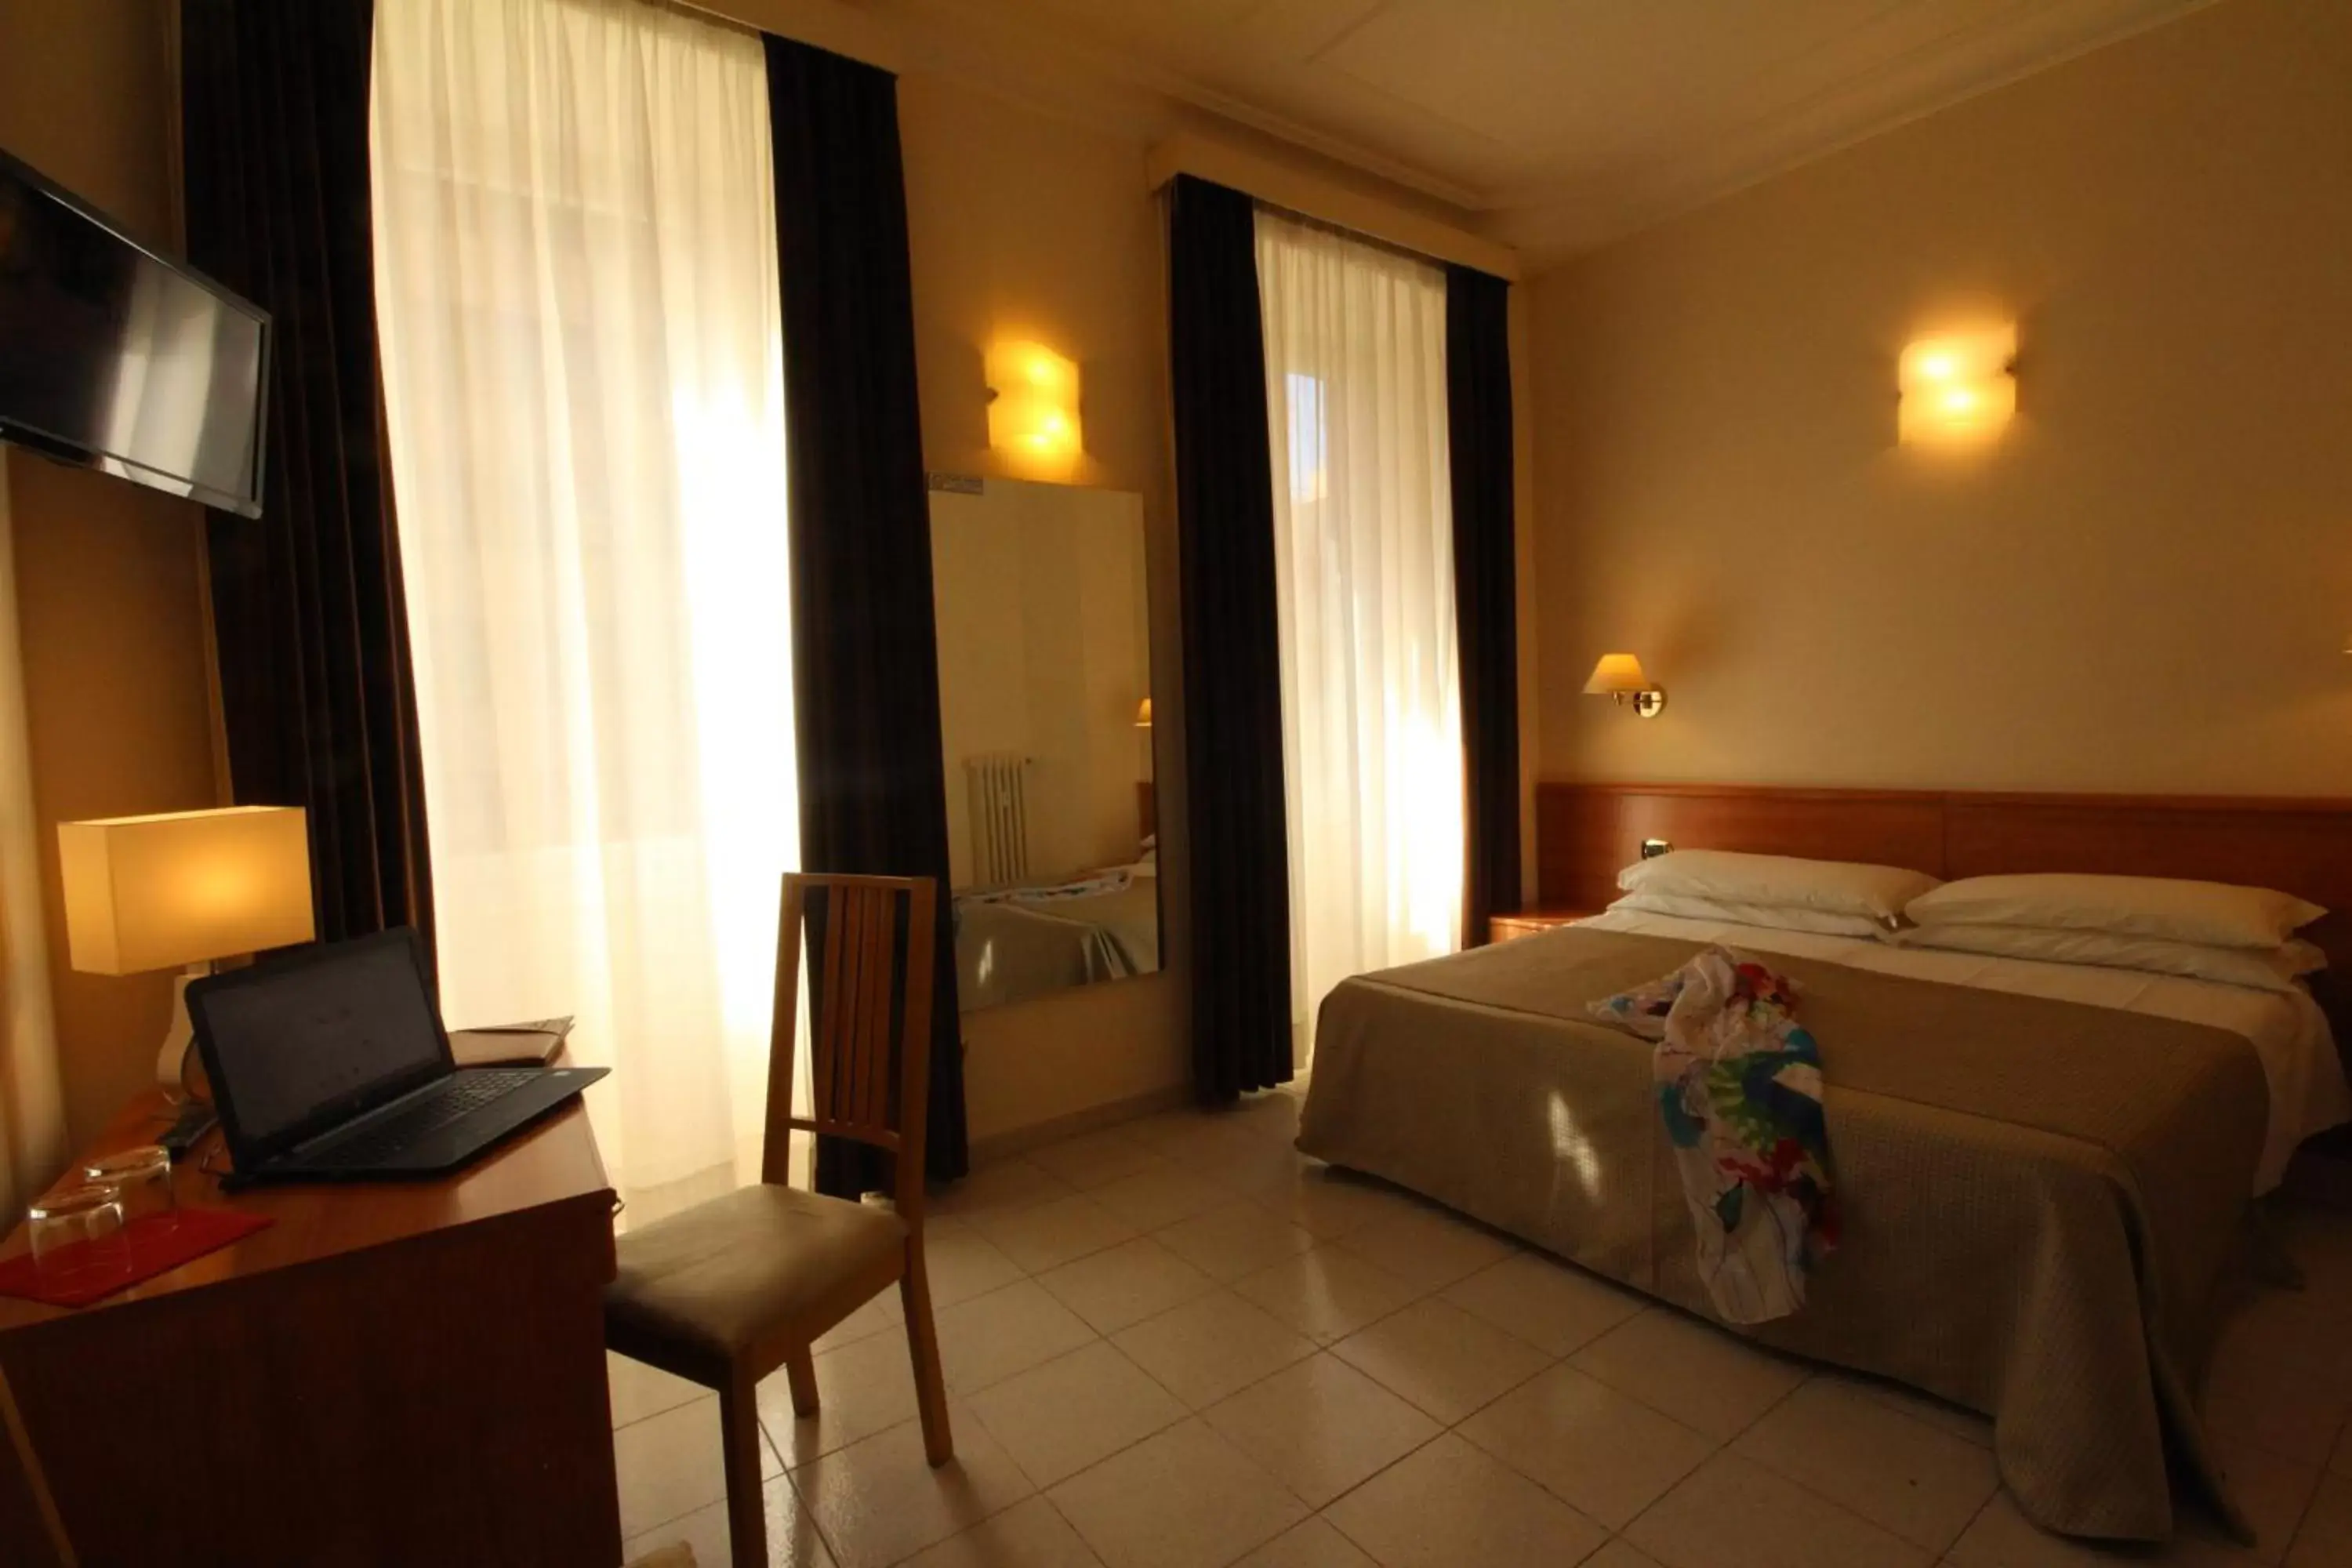 Bed, Room Photo in Hotel Principe Eugenio